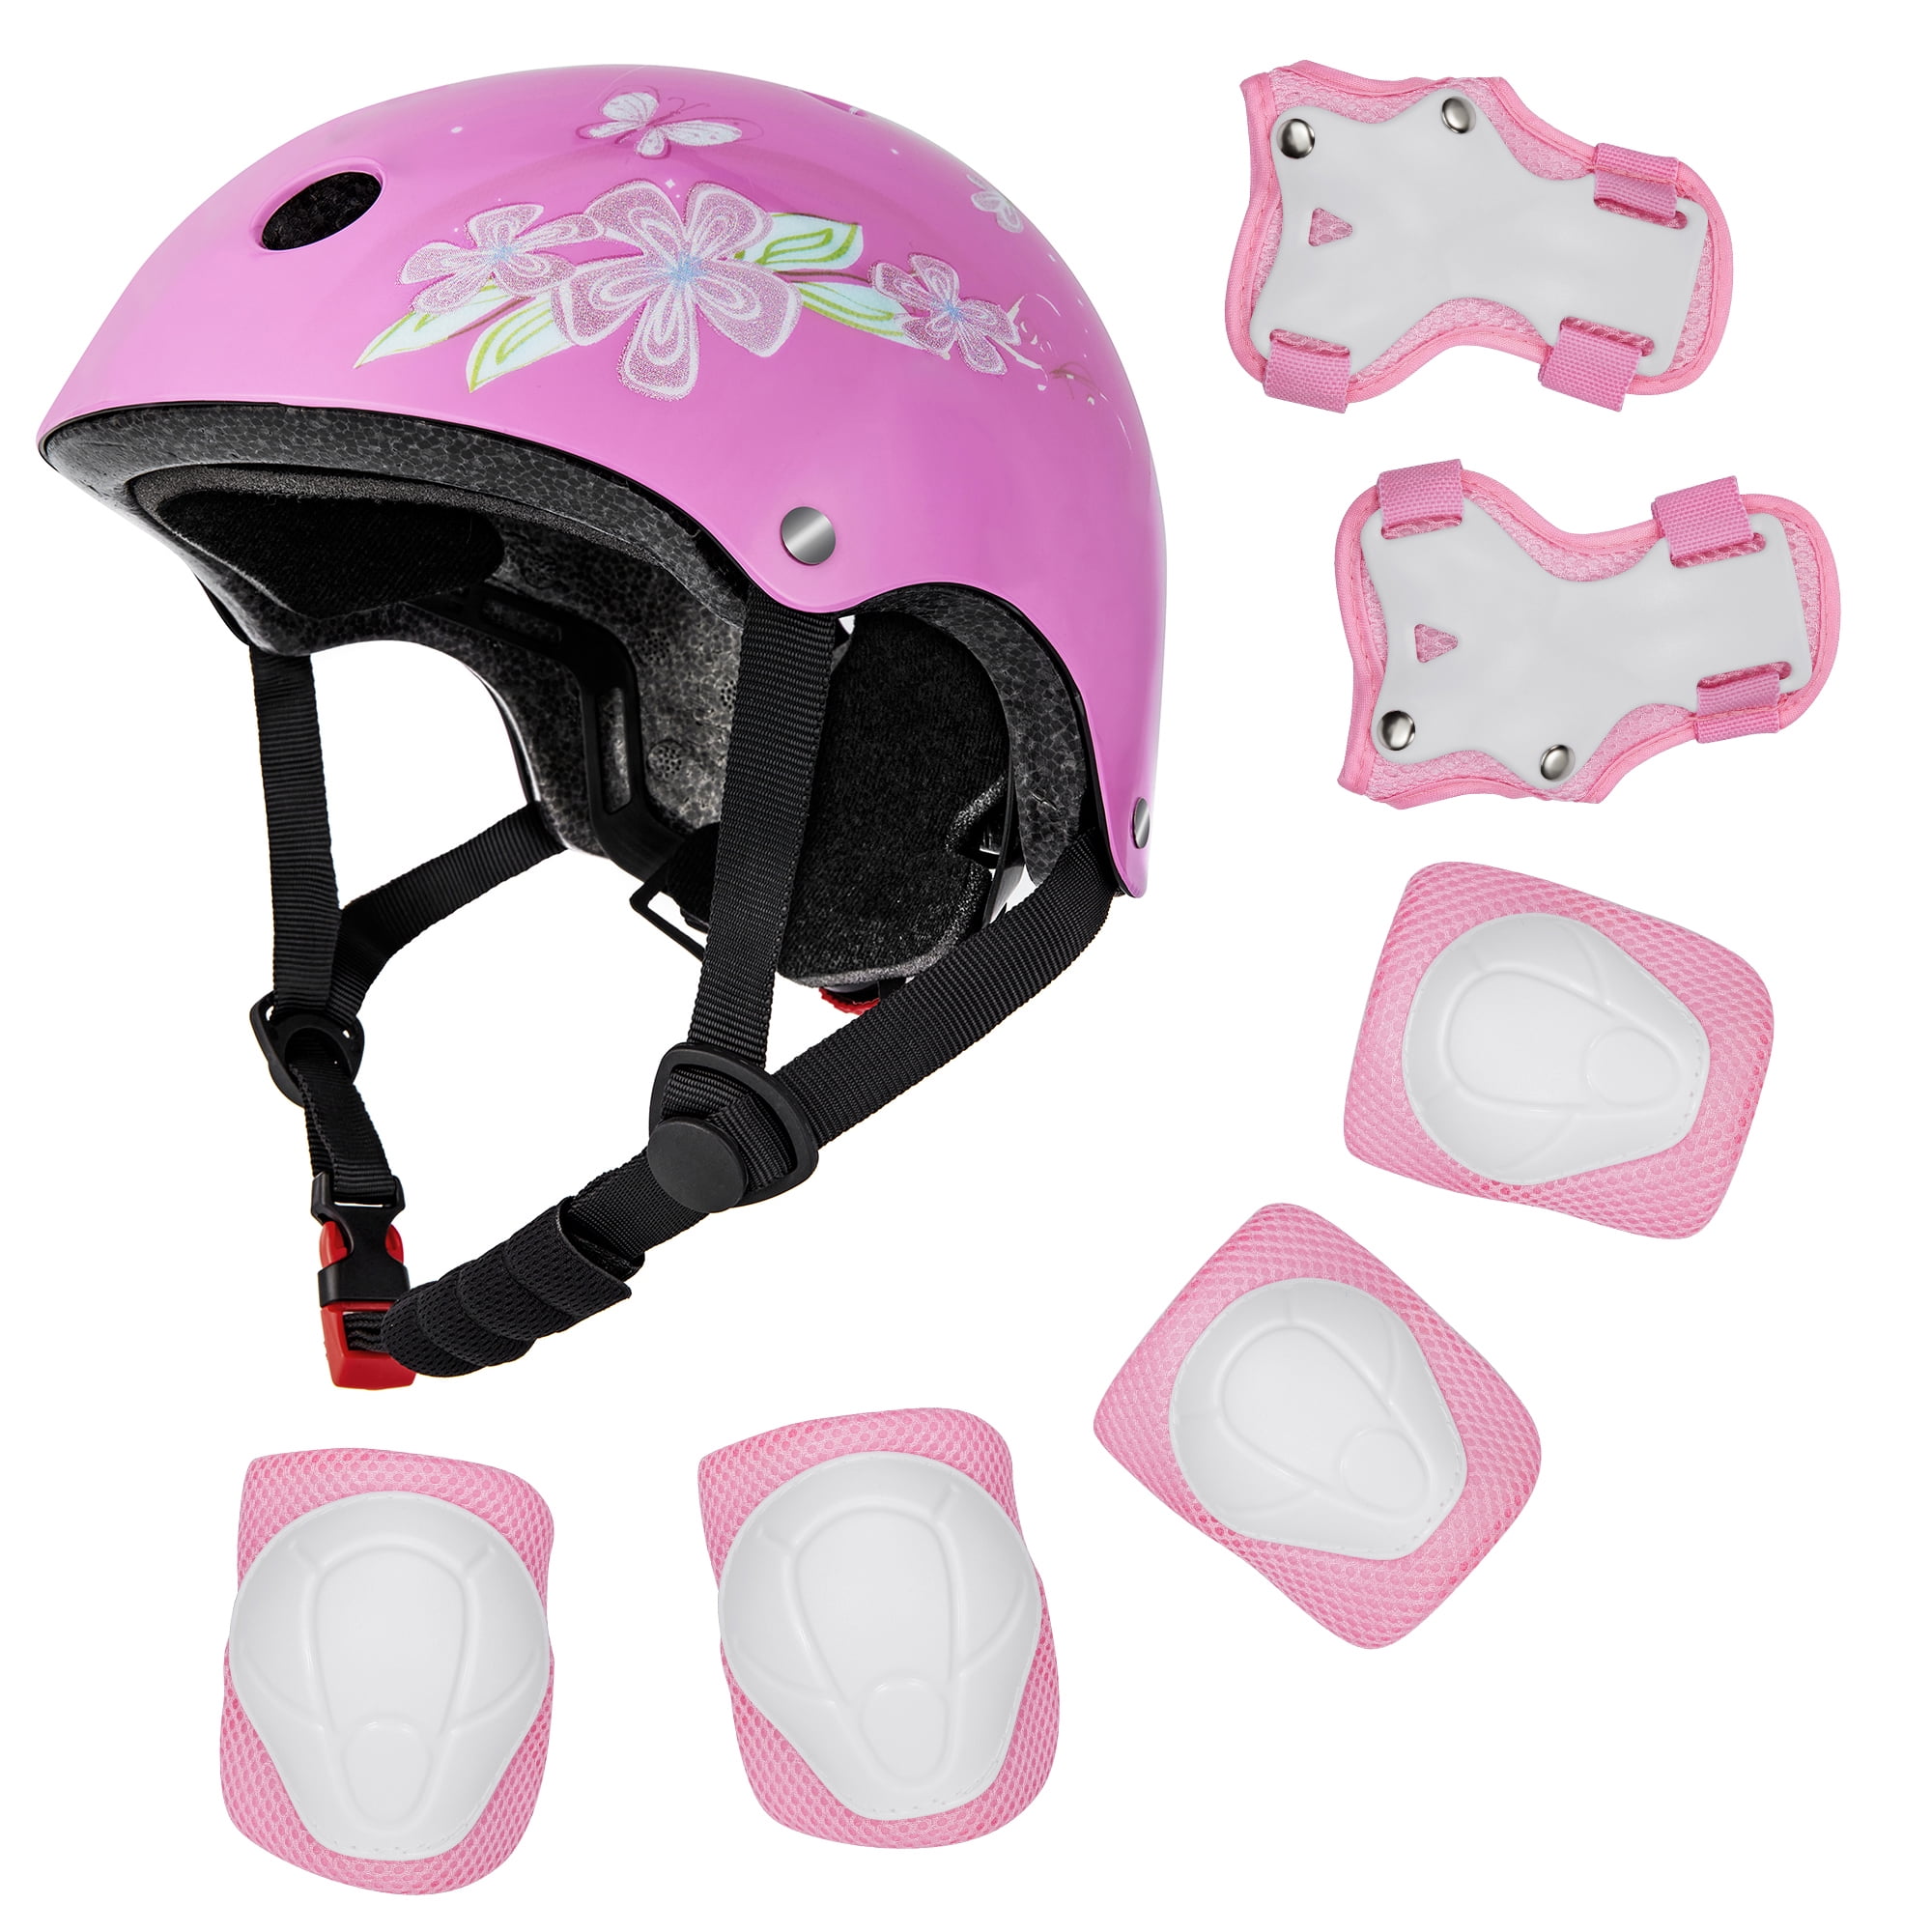 White Junior 6-12 Yr Kids Protective Safety Pad & Helmet Set Skateboard Pink 